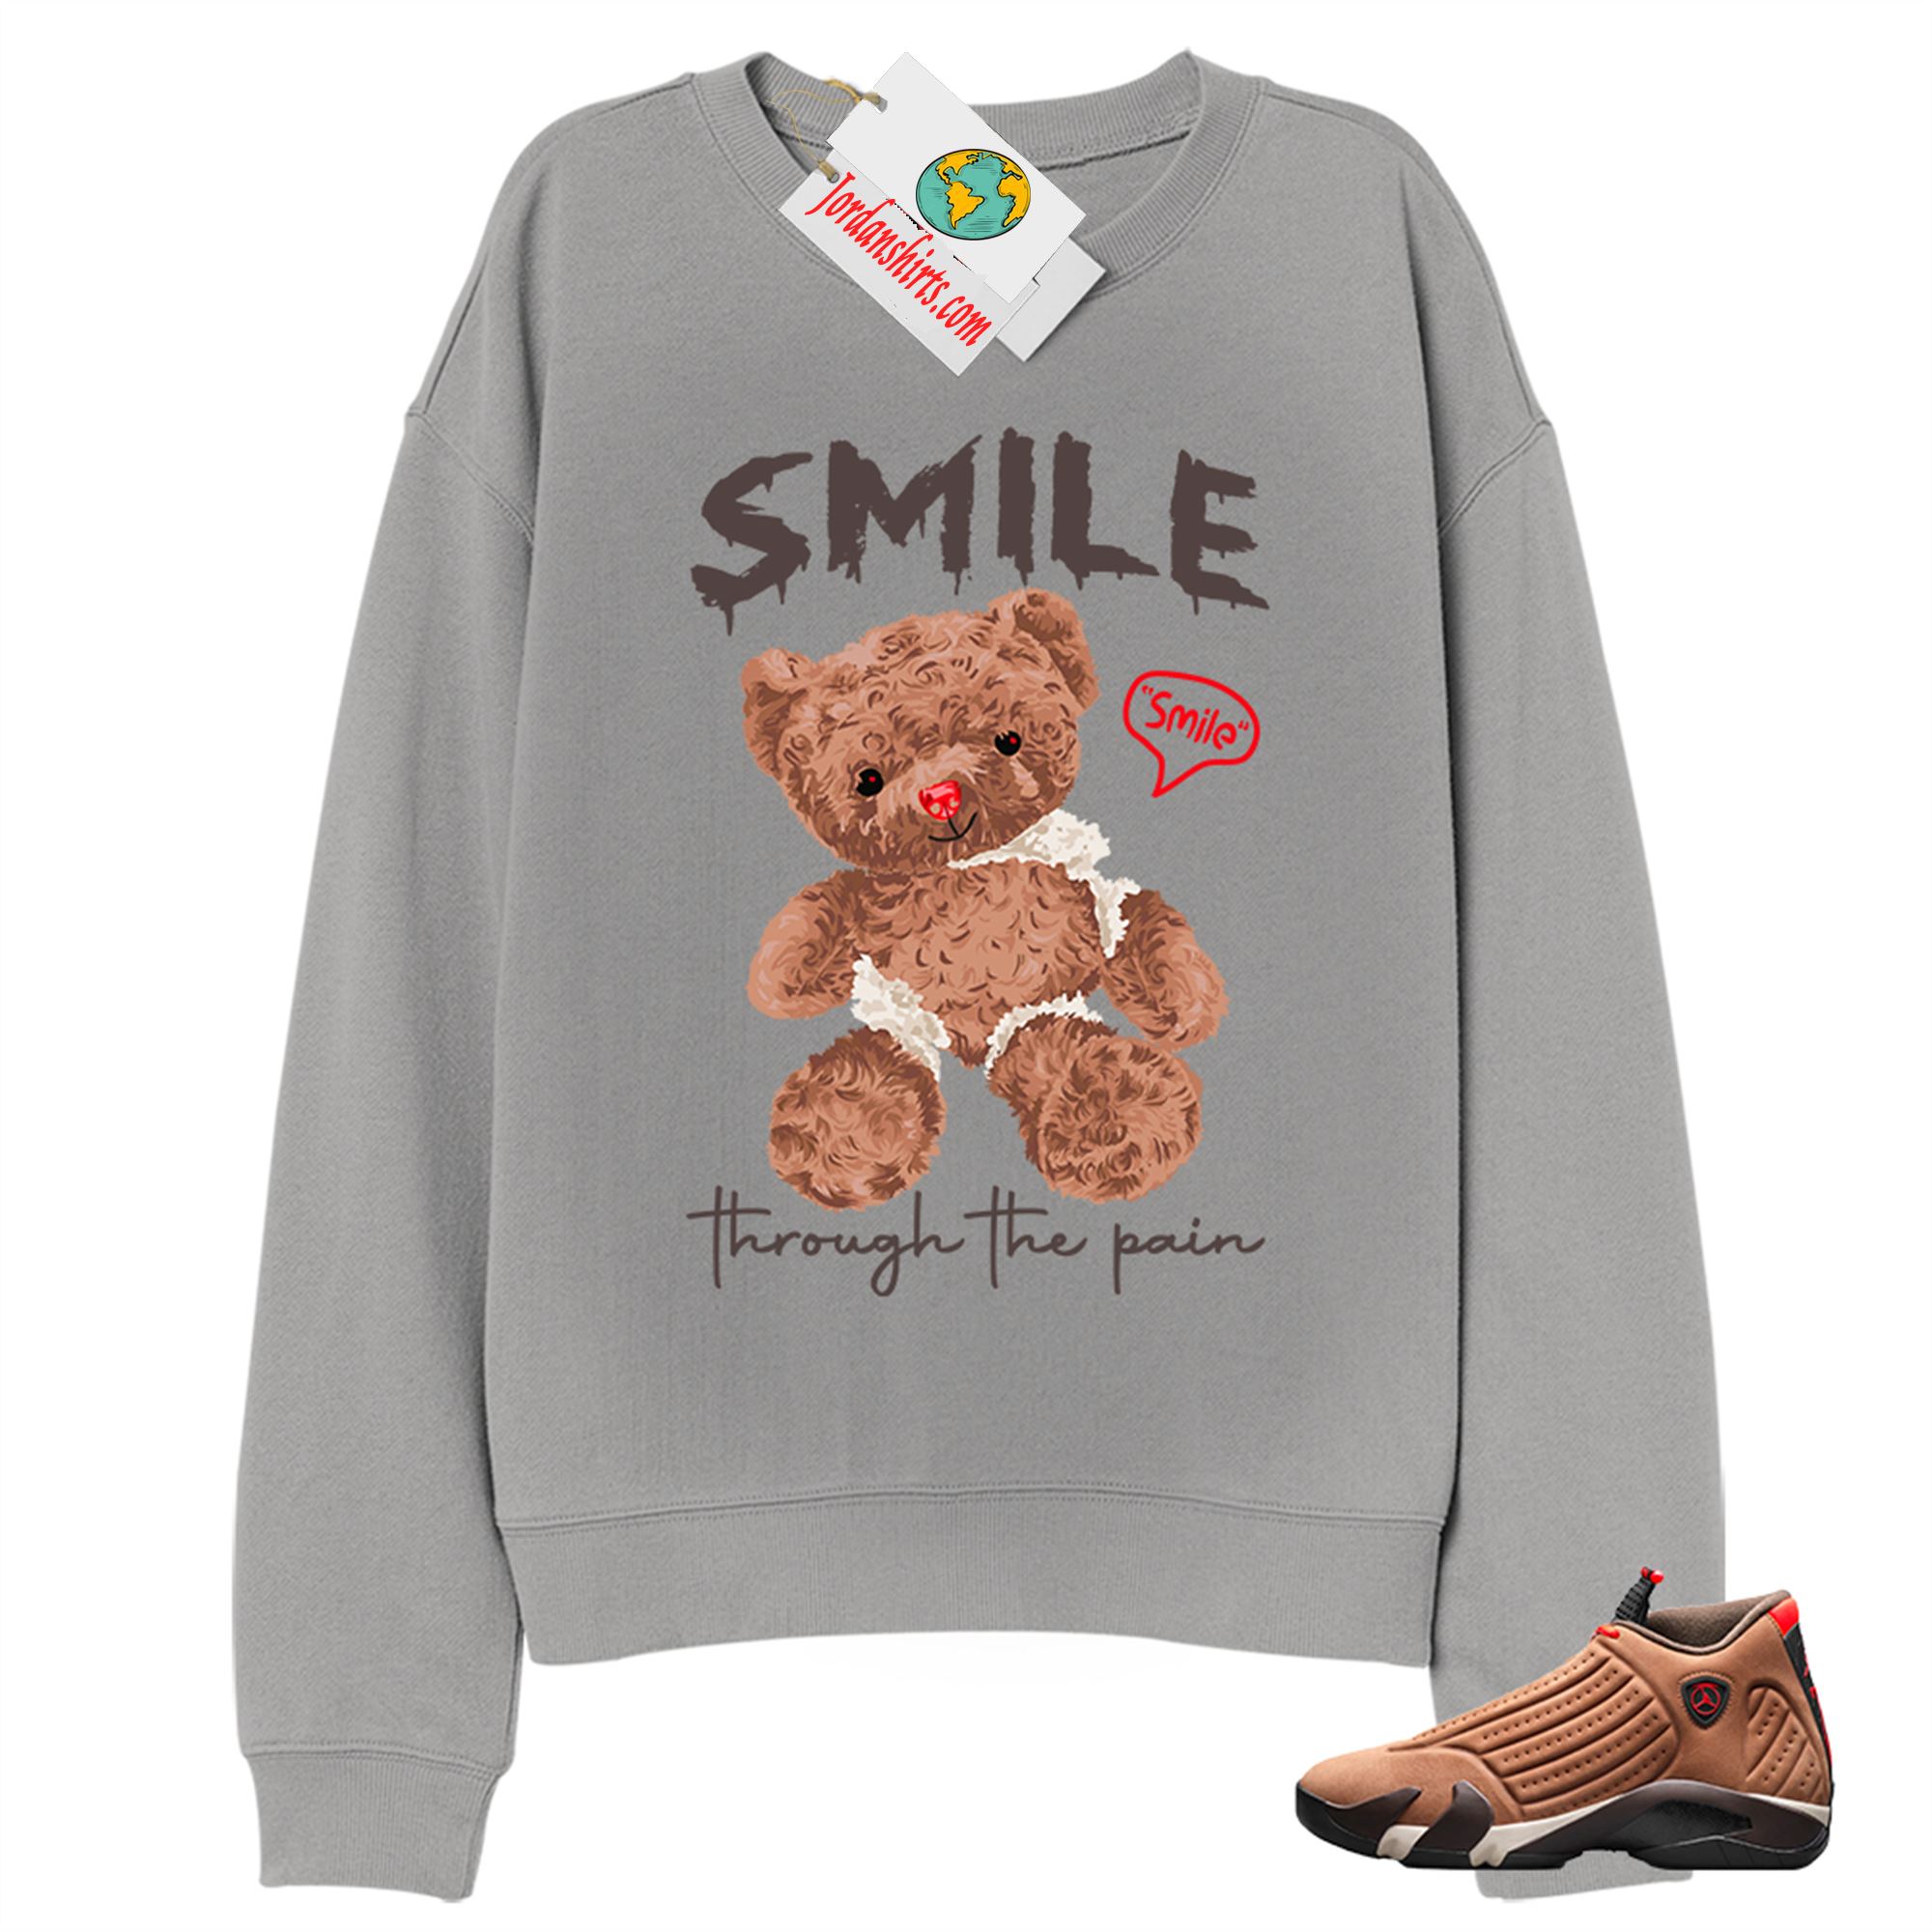 Jordan 14 Sweatshirt, Teddy Bear Smile Pain Grey Sweatshirt Air Jordan 14 Winterized 14s Plus Size Up To 5xl